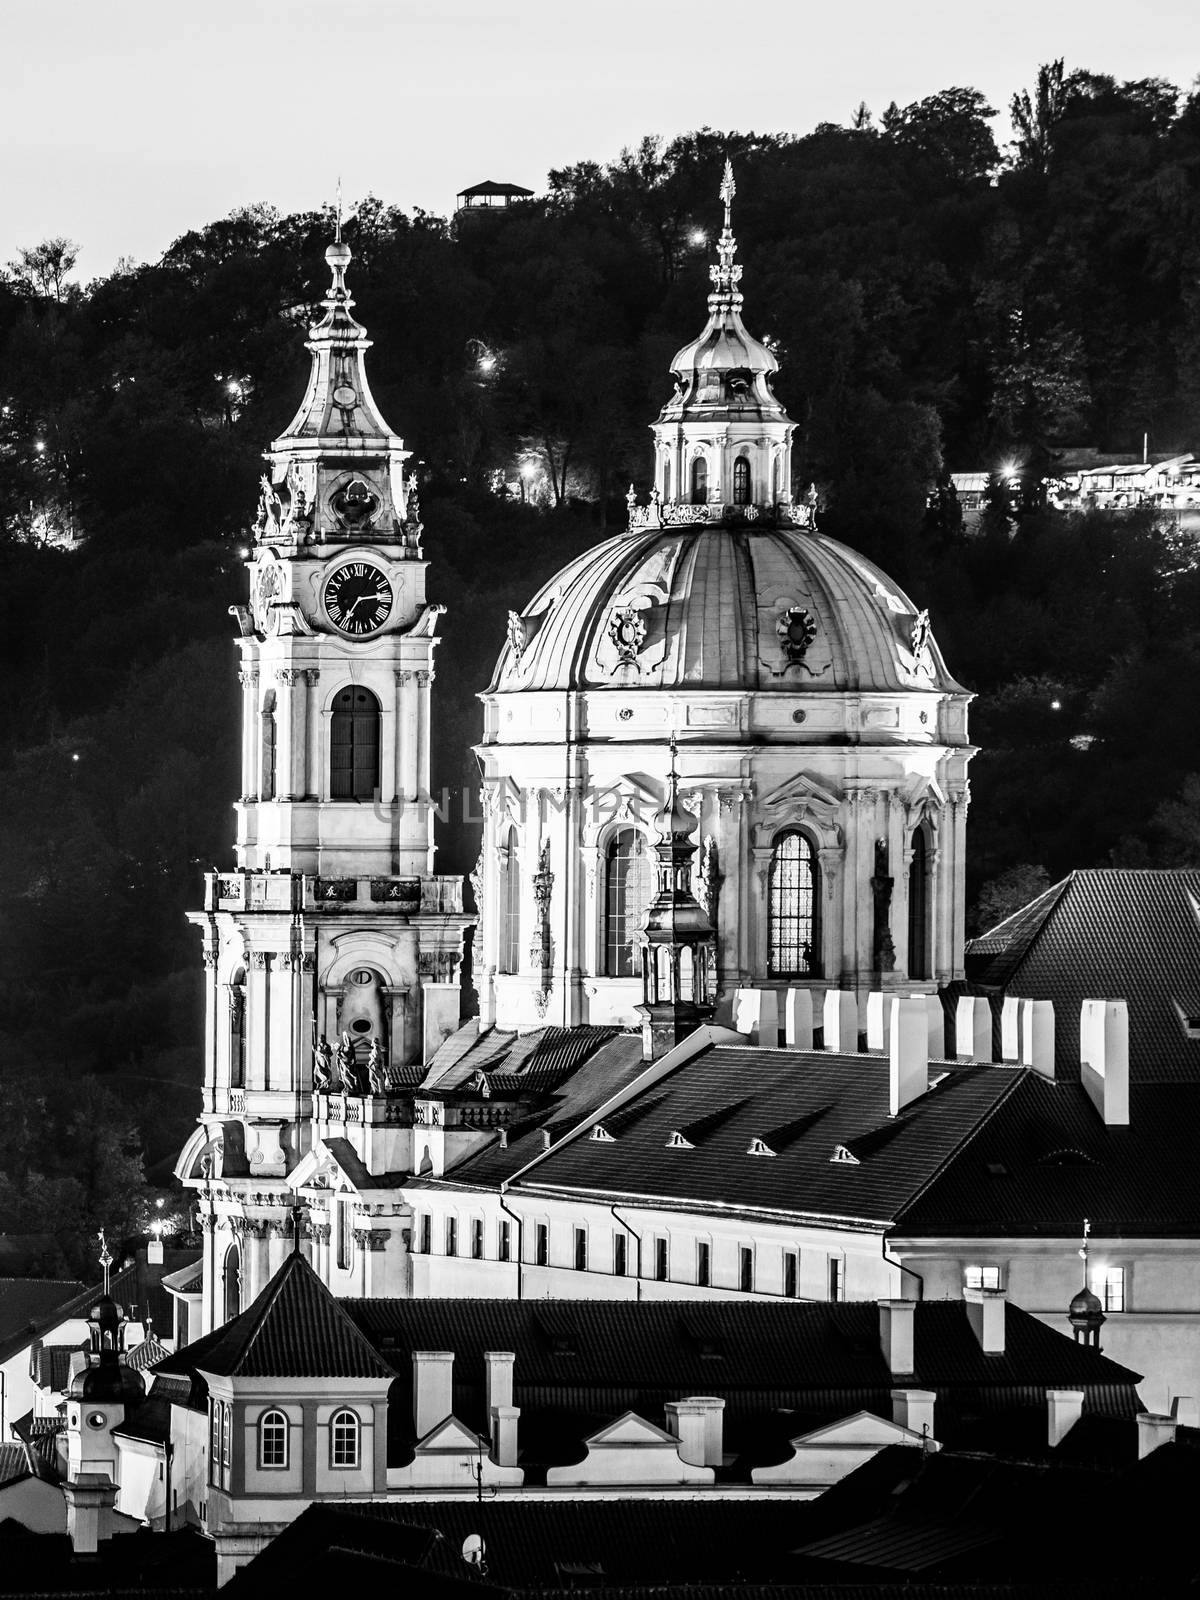 St Nicholas Church in Mala Strana, Lesser Town district, in the evening, Prague, Czech Republic. Black and white image.